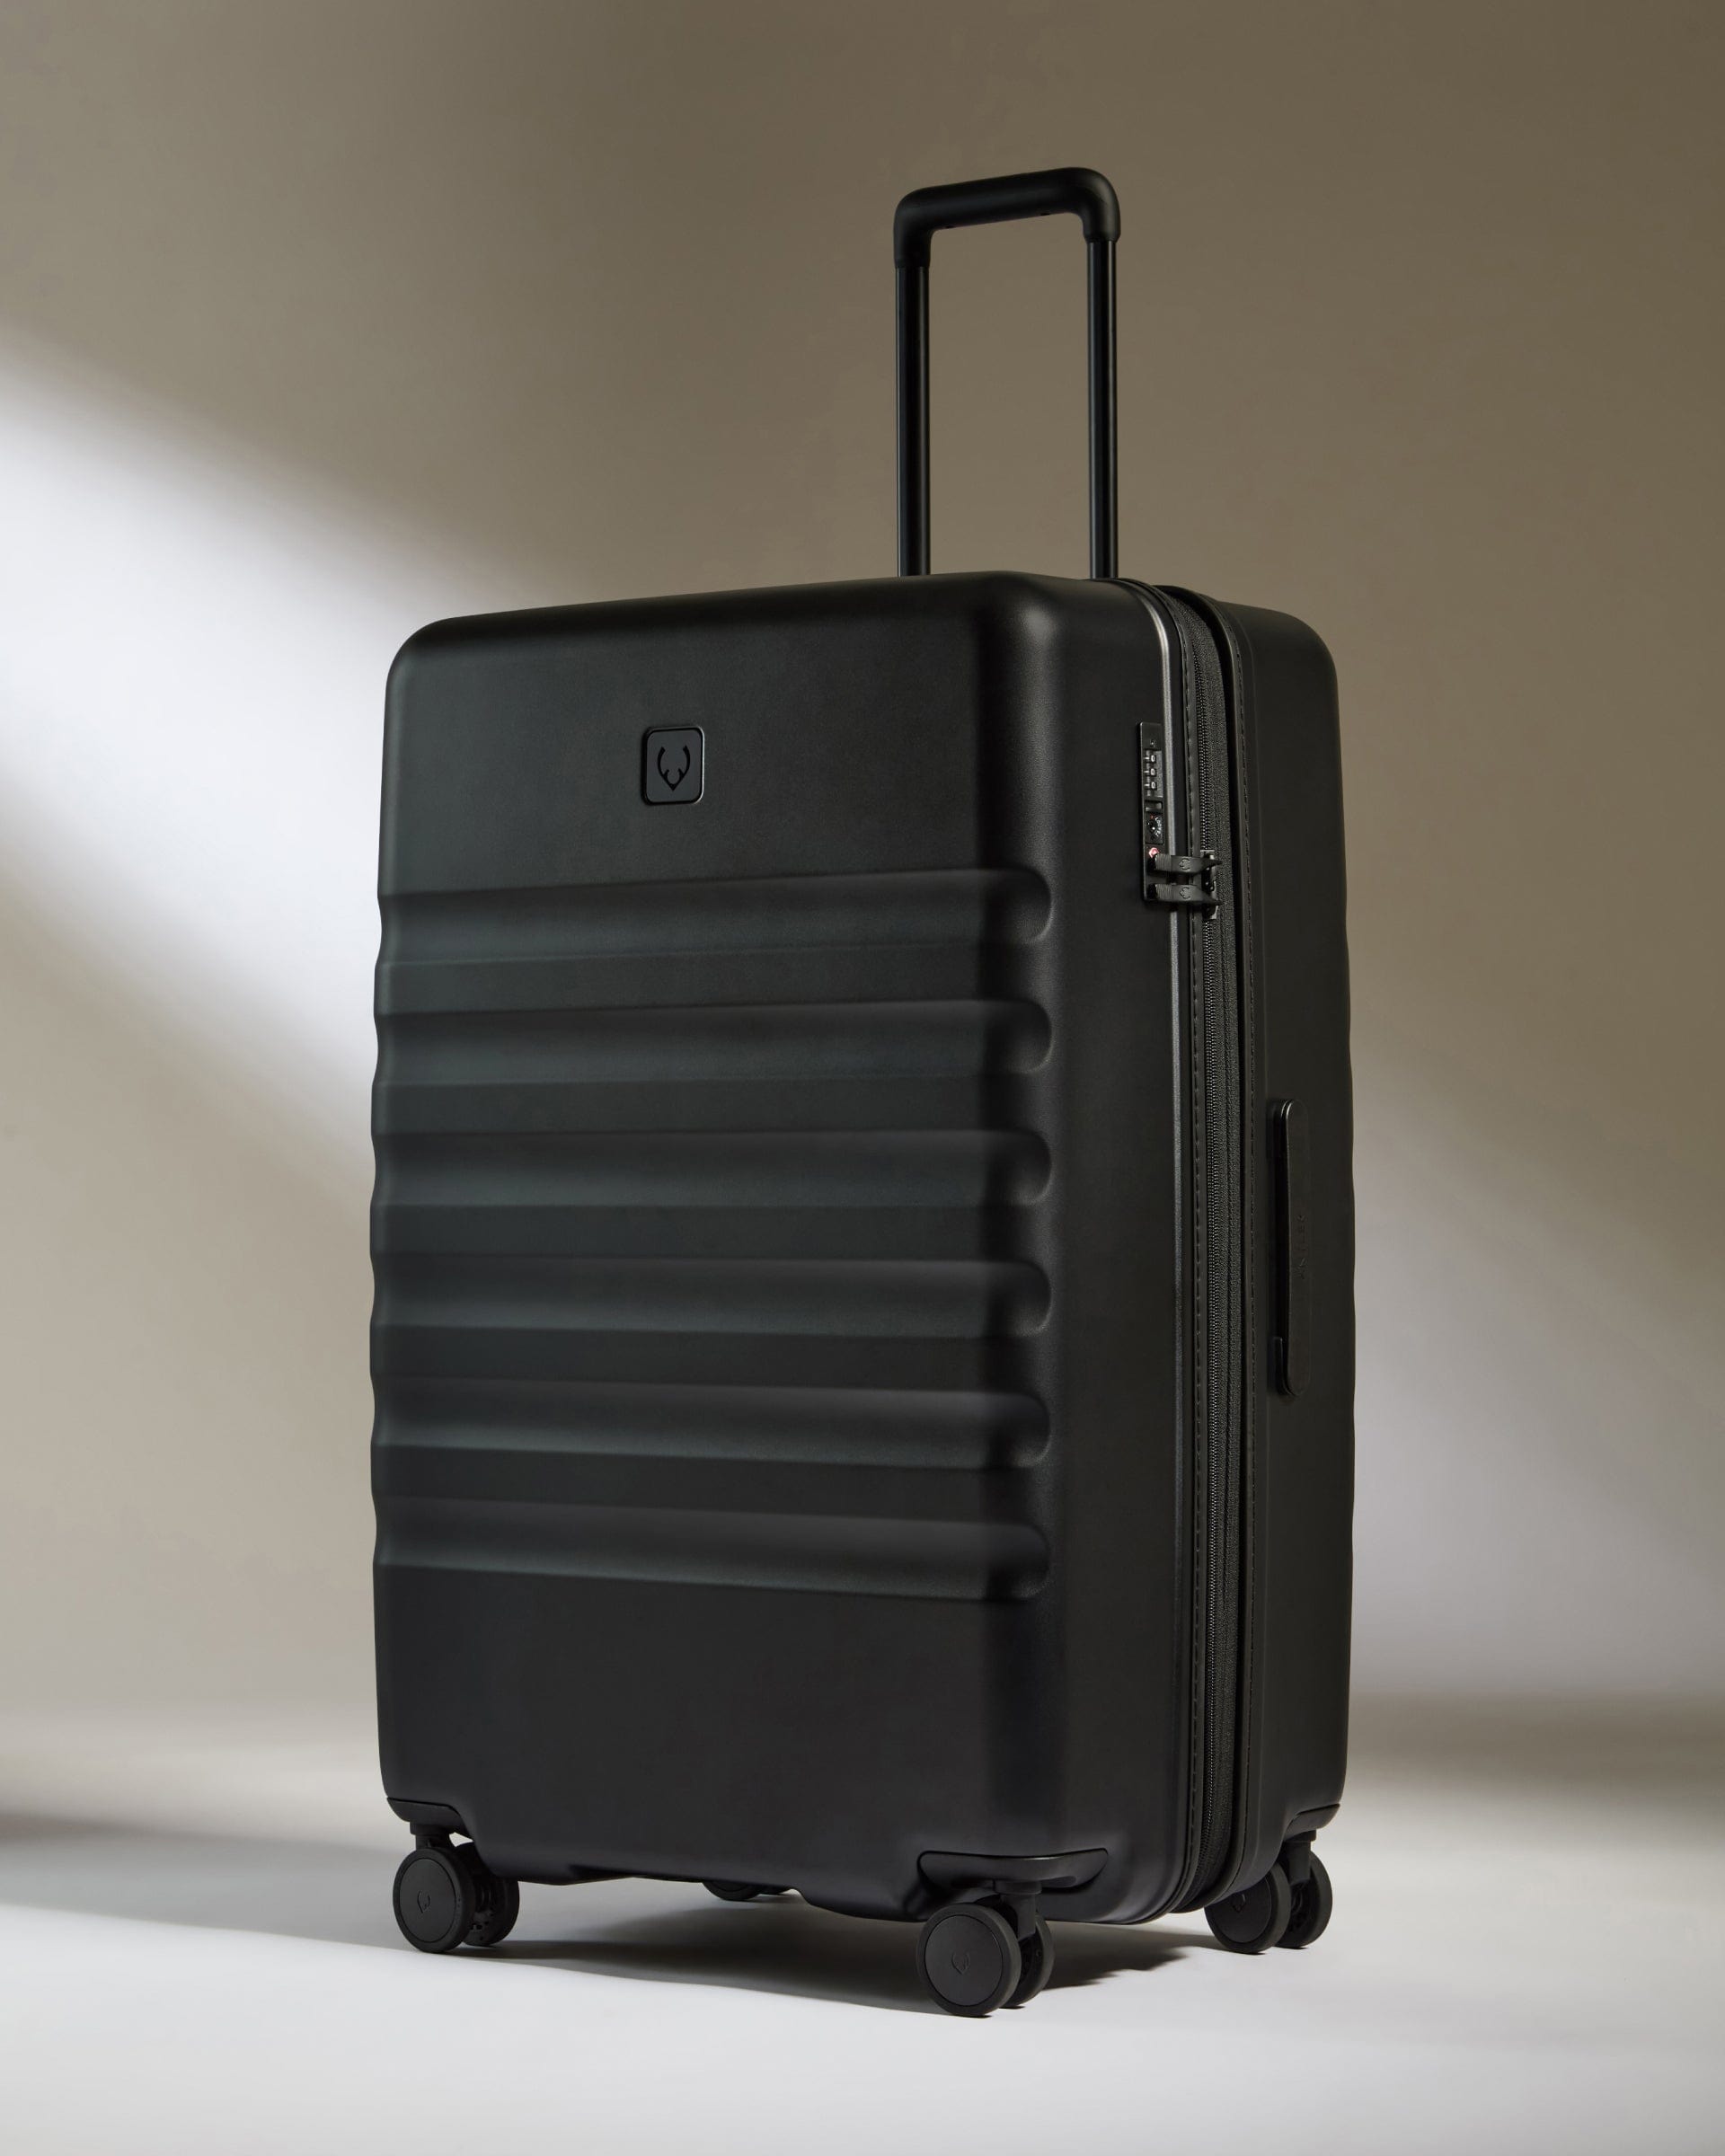 View Antler Icon Stripe Large Suitcase In Black Size 336cm x 78cm x 517cm information